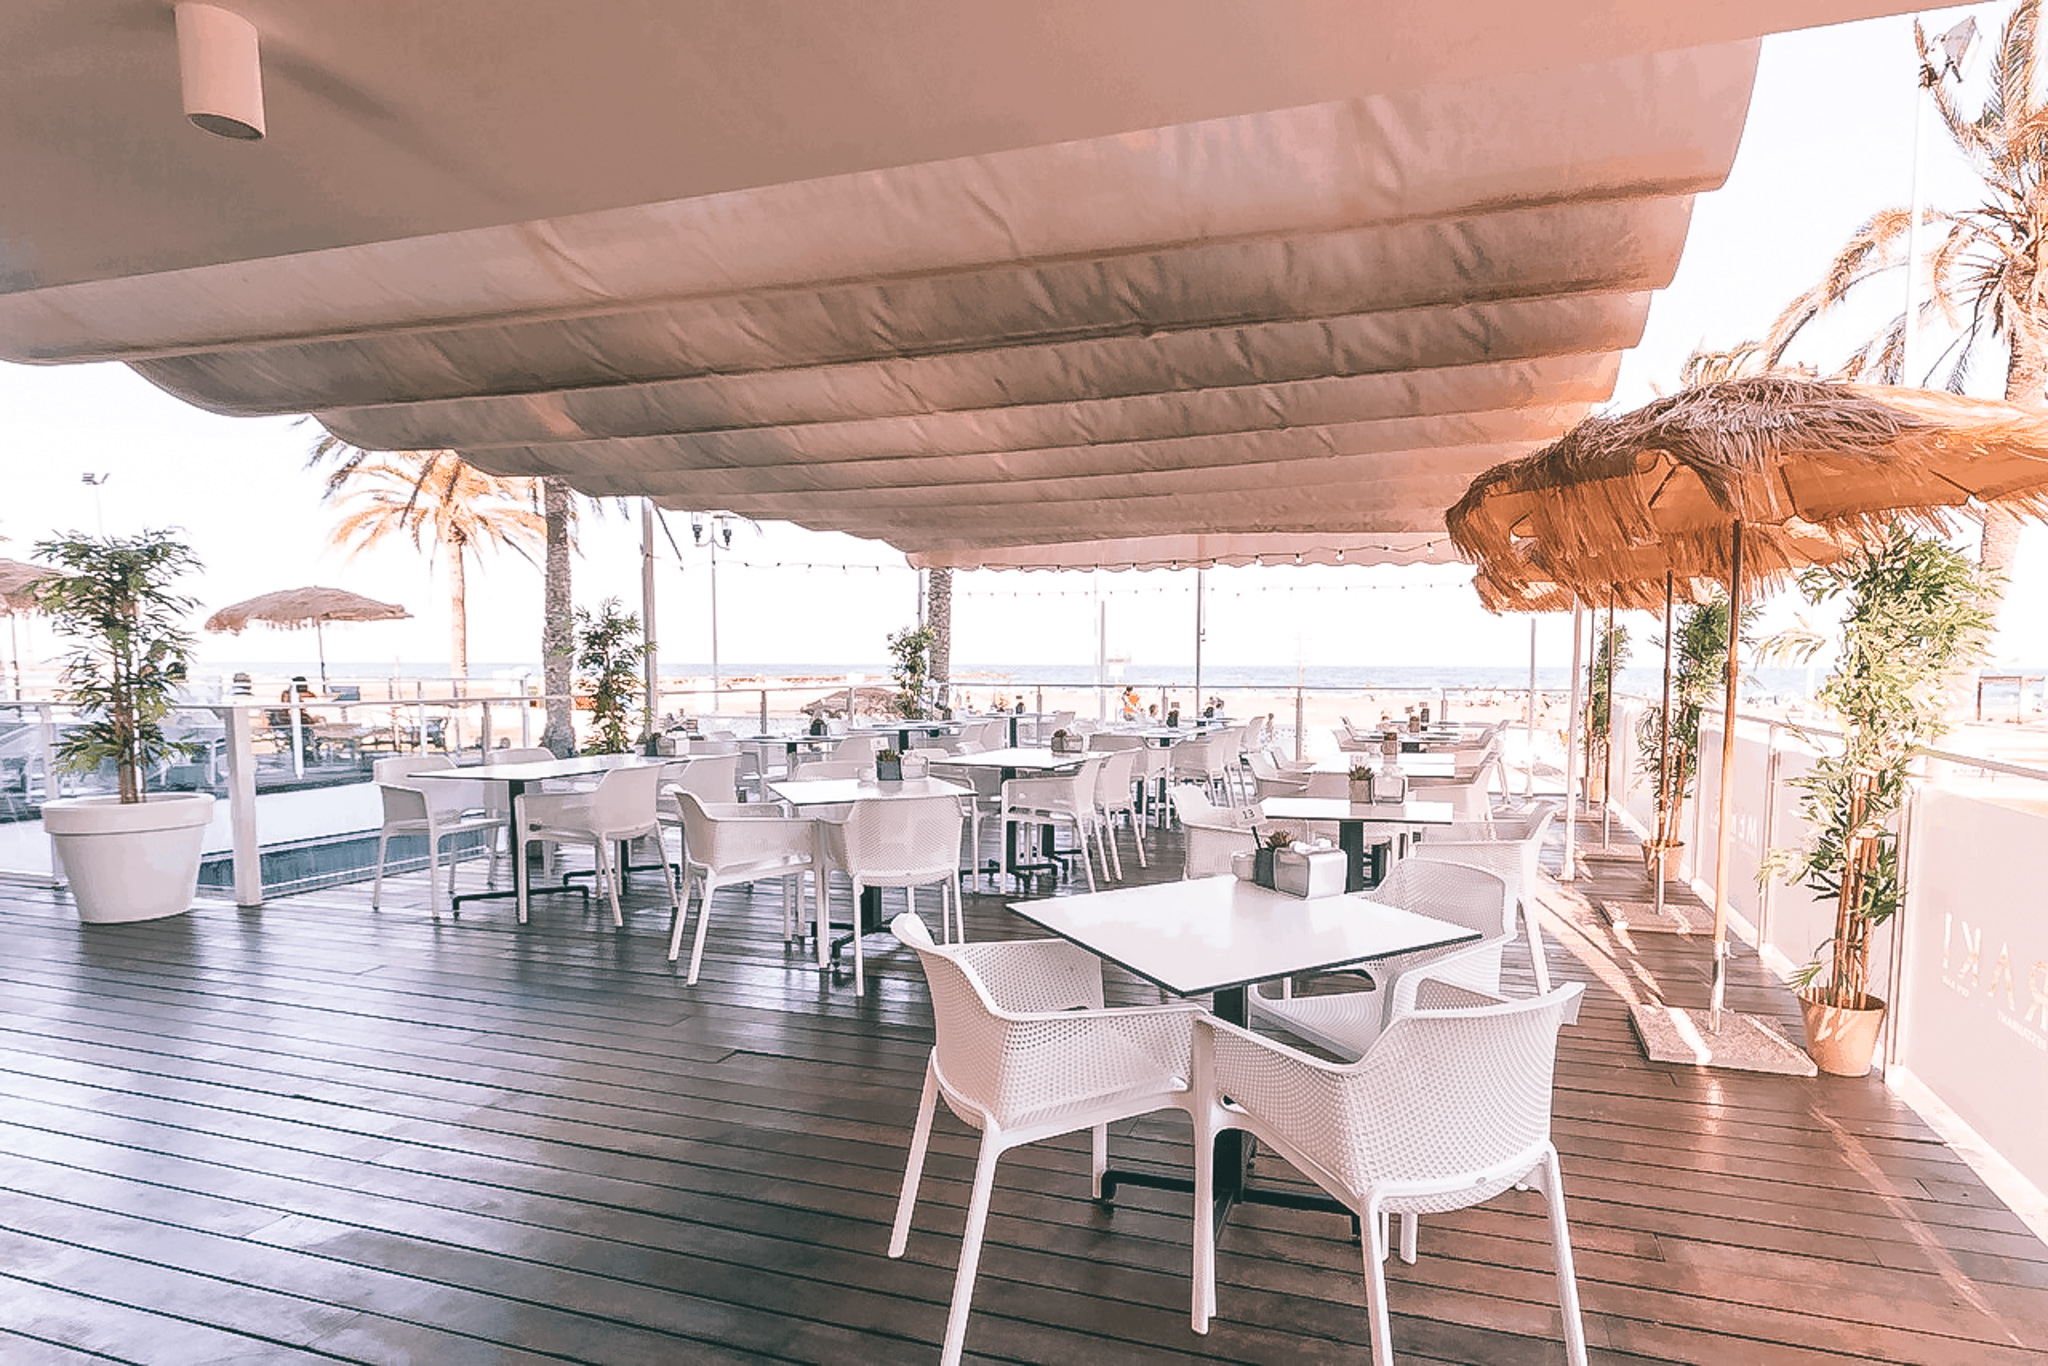 Meraki Beach Sky Bar Club Valencia | Events | Tickets & Guest Lists | Xceed